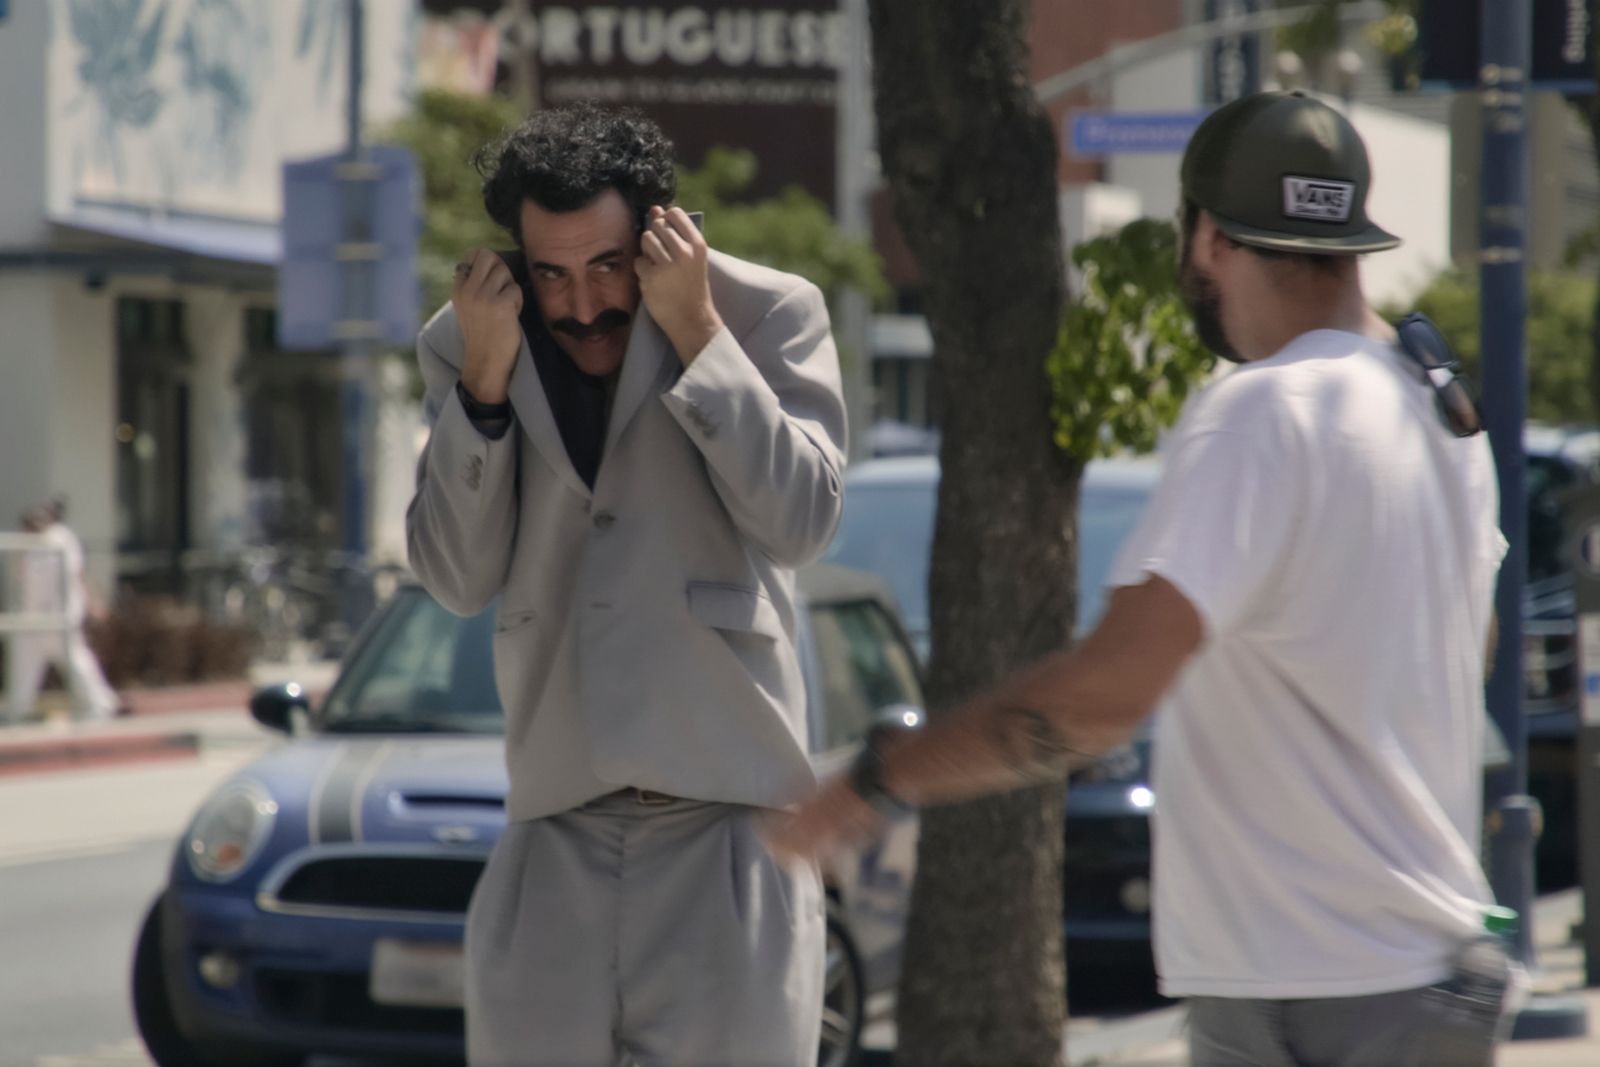 Borat Subsequent Moviefilm': Sacha Baron Cohen's Holy Fool